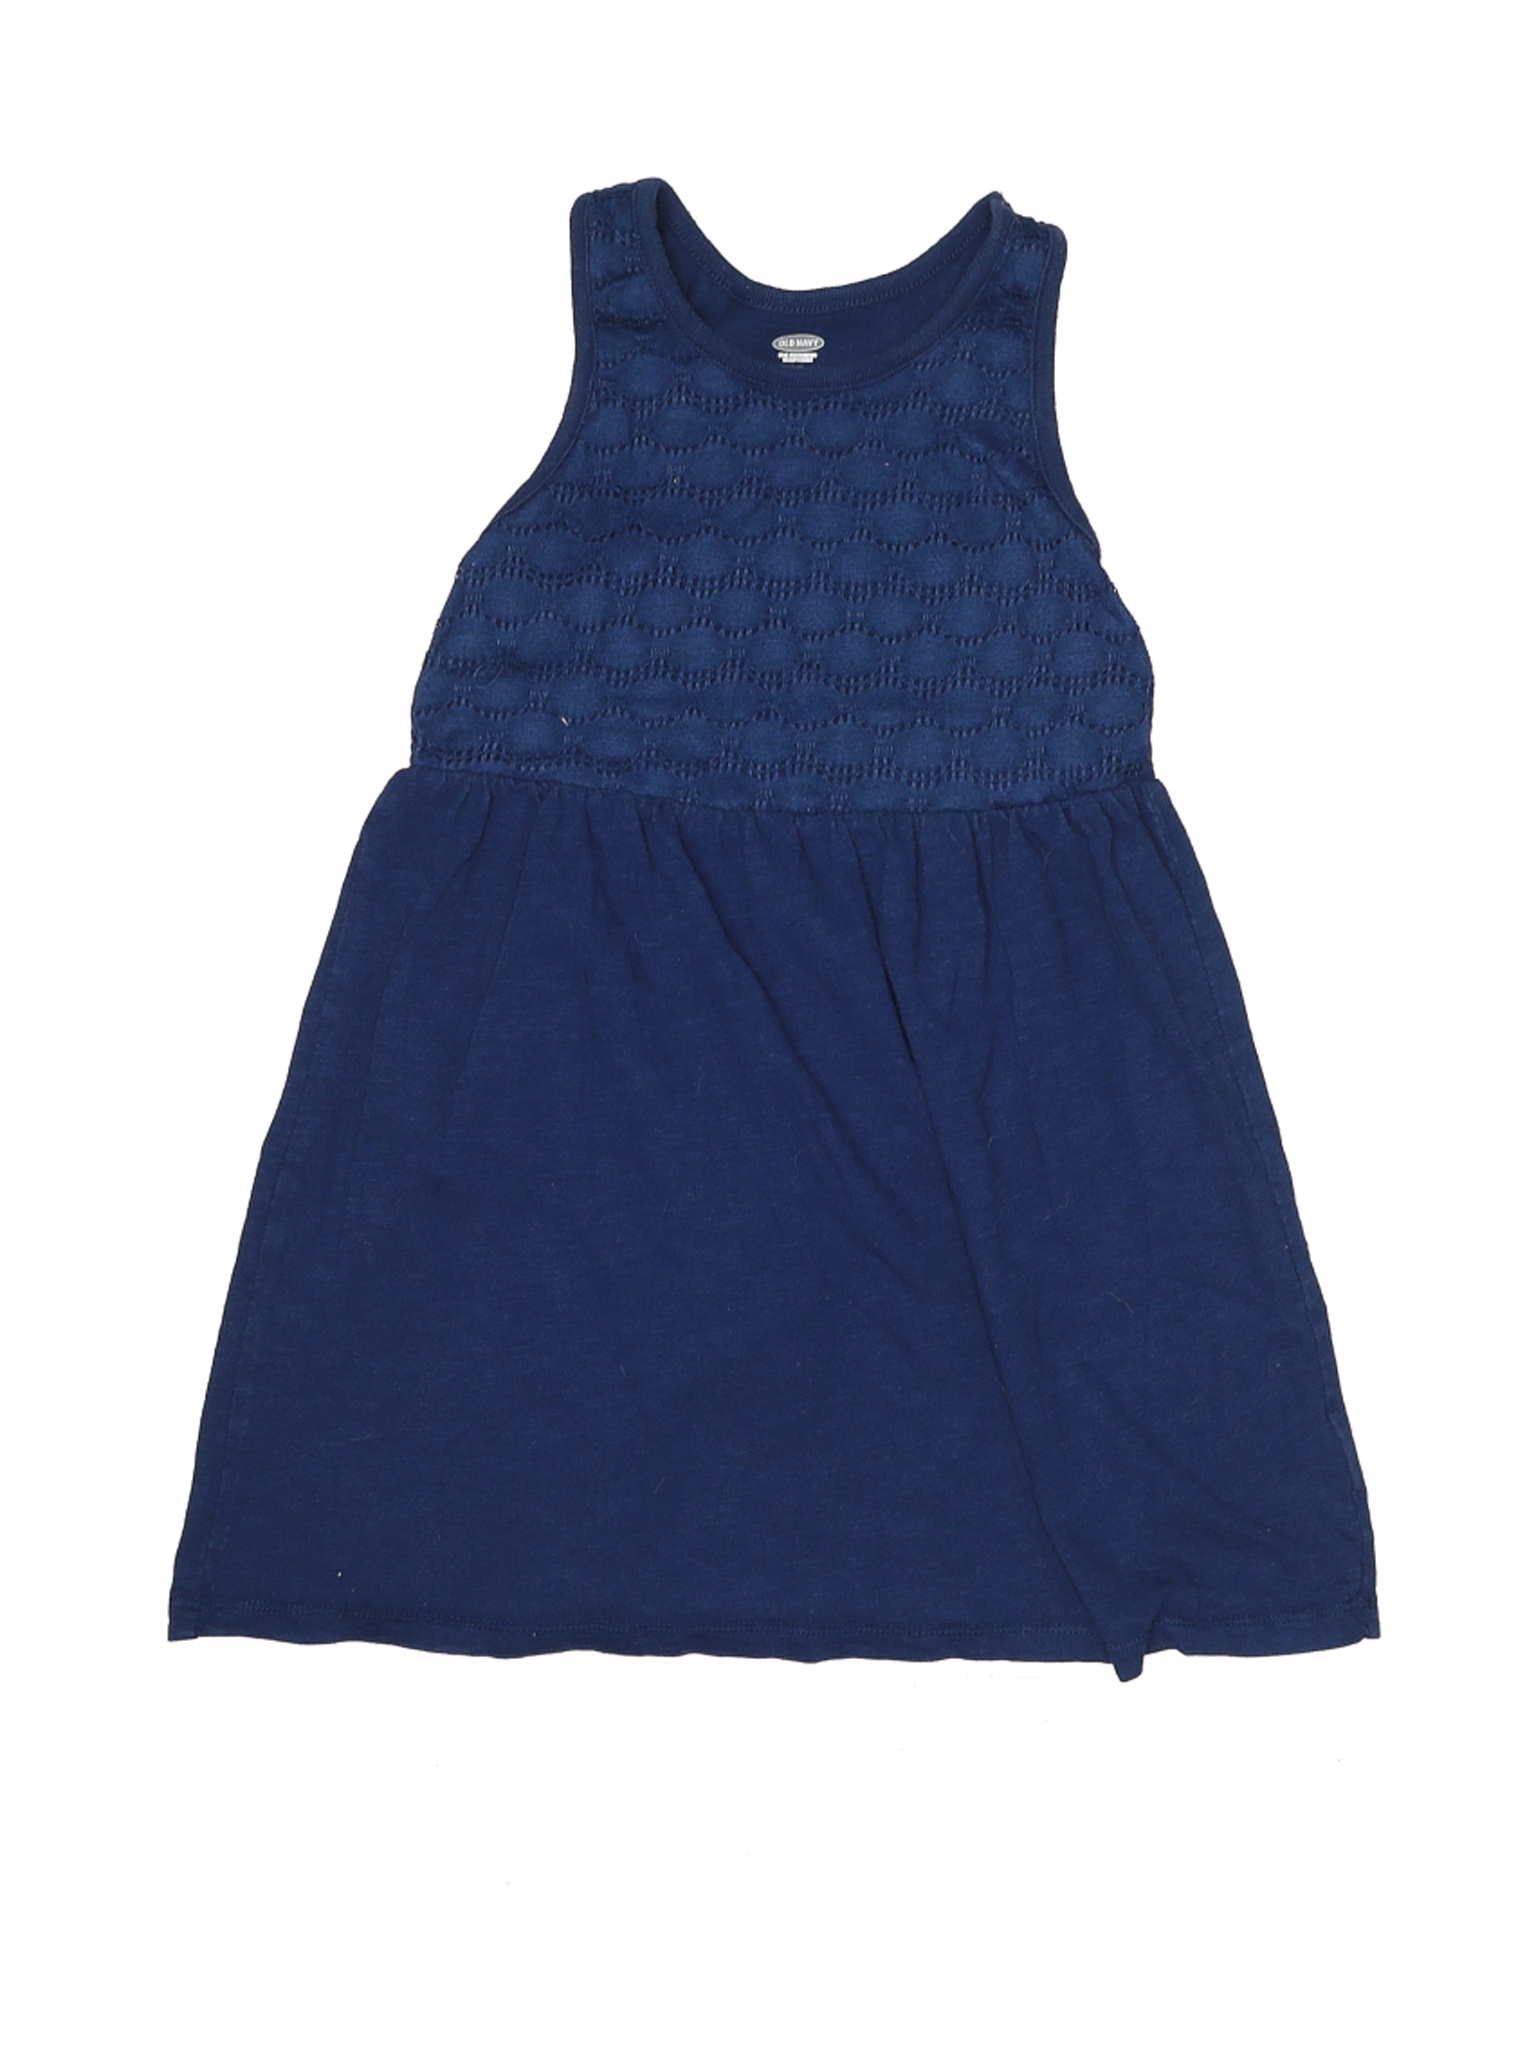 Old Navy Girls Blue Dress 6 | eBay